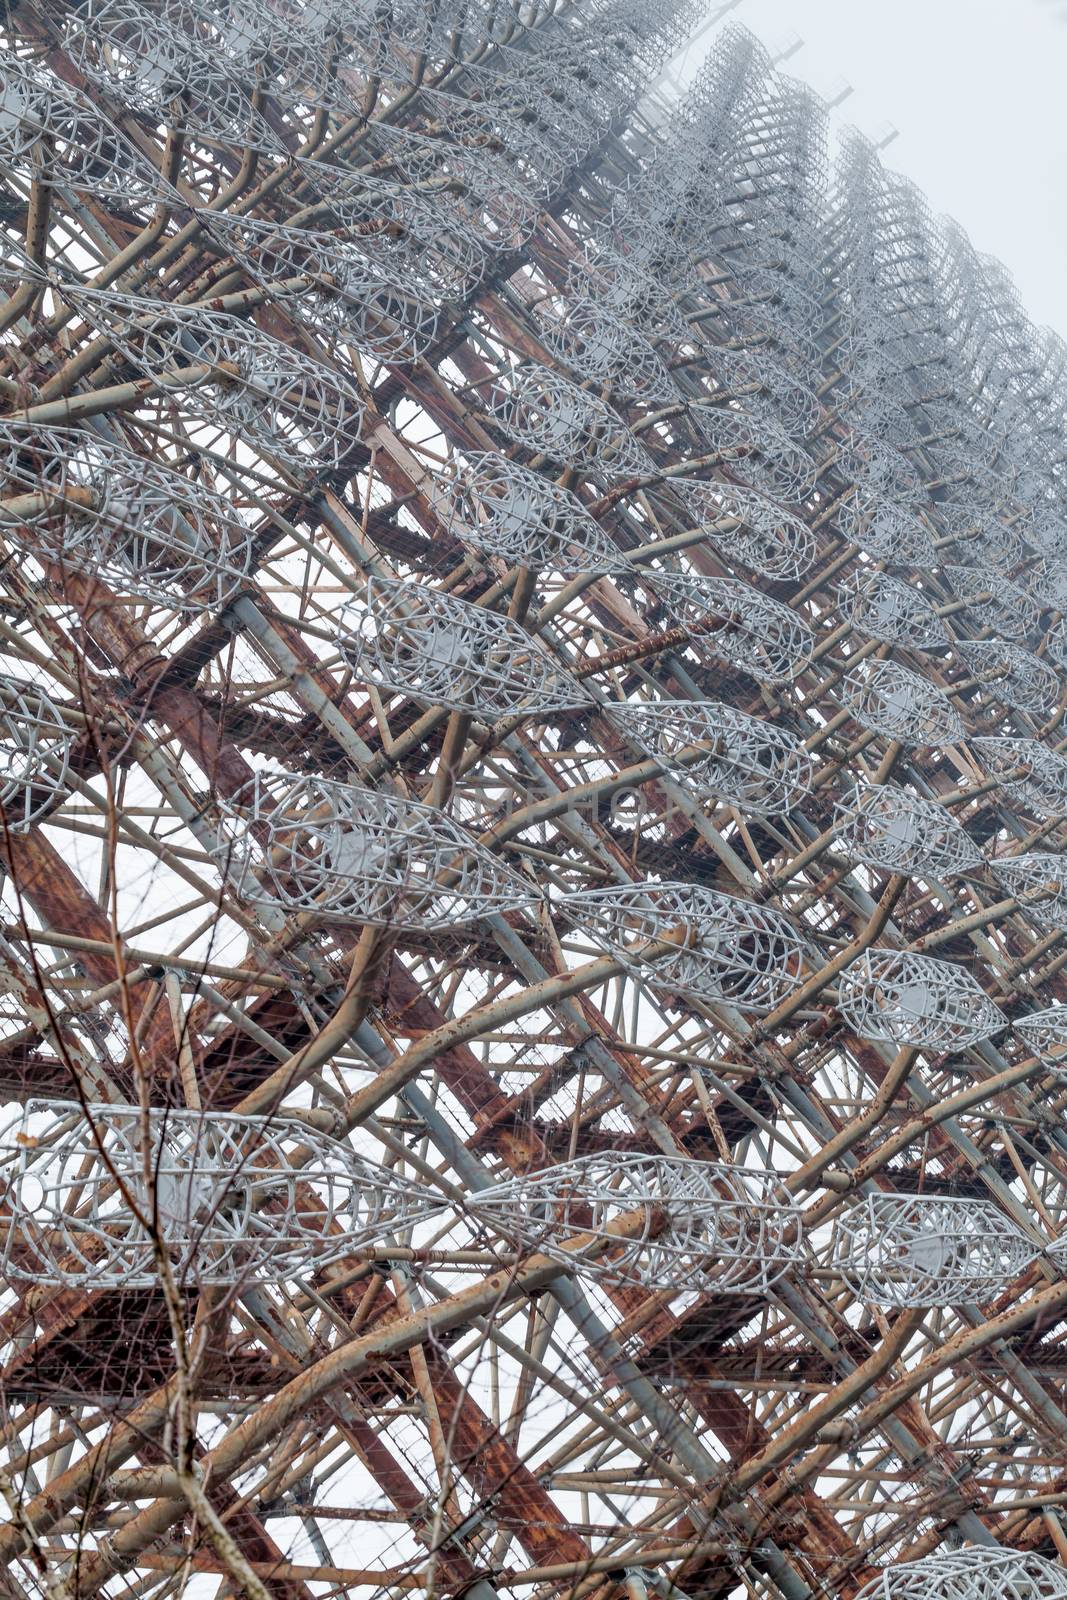 Soviet Radar System Duga near Chernobyl Nuclear Power Plant by igor_stramyk